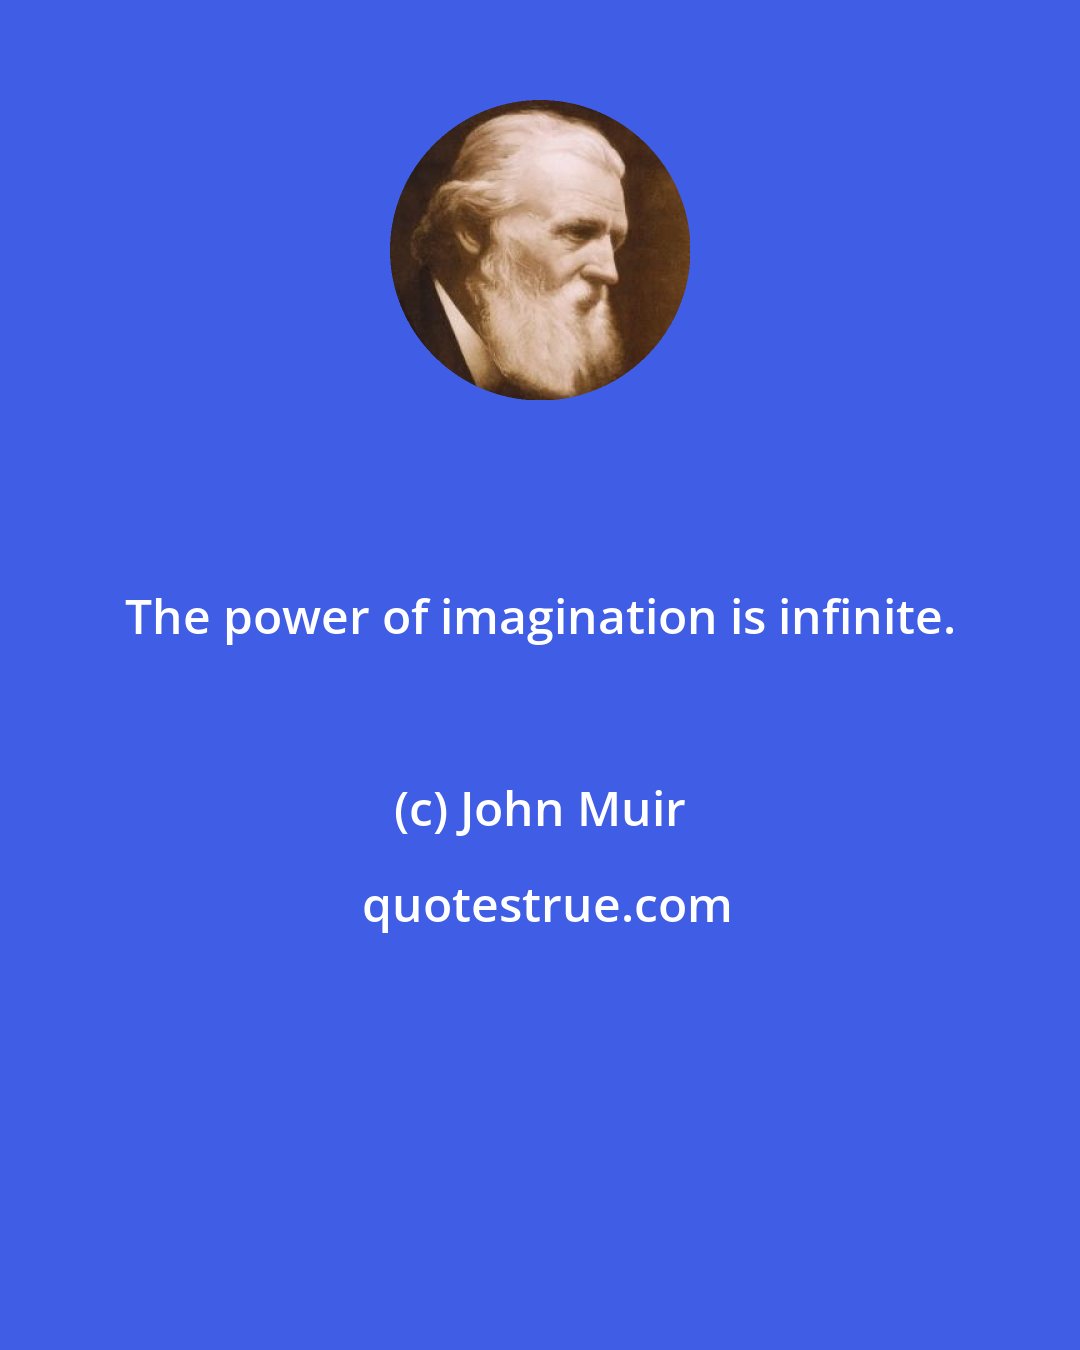 John Muir: The power of imagination is infinite.